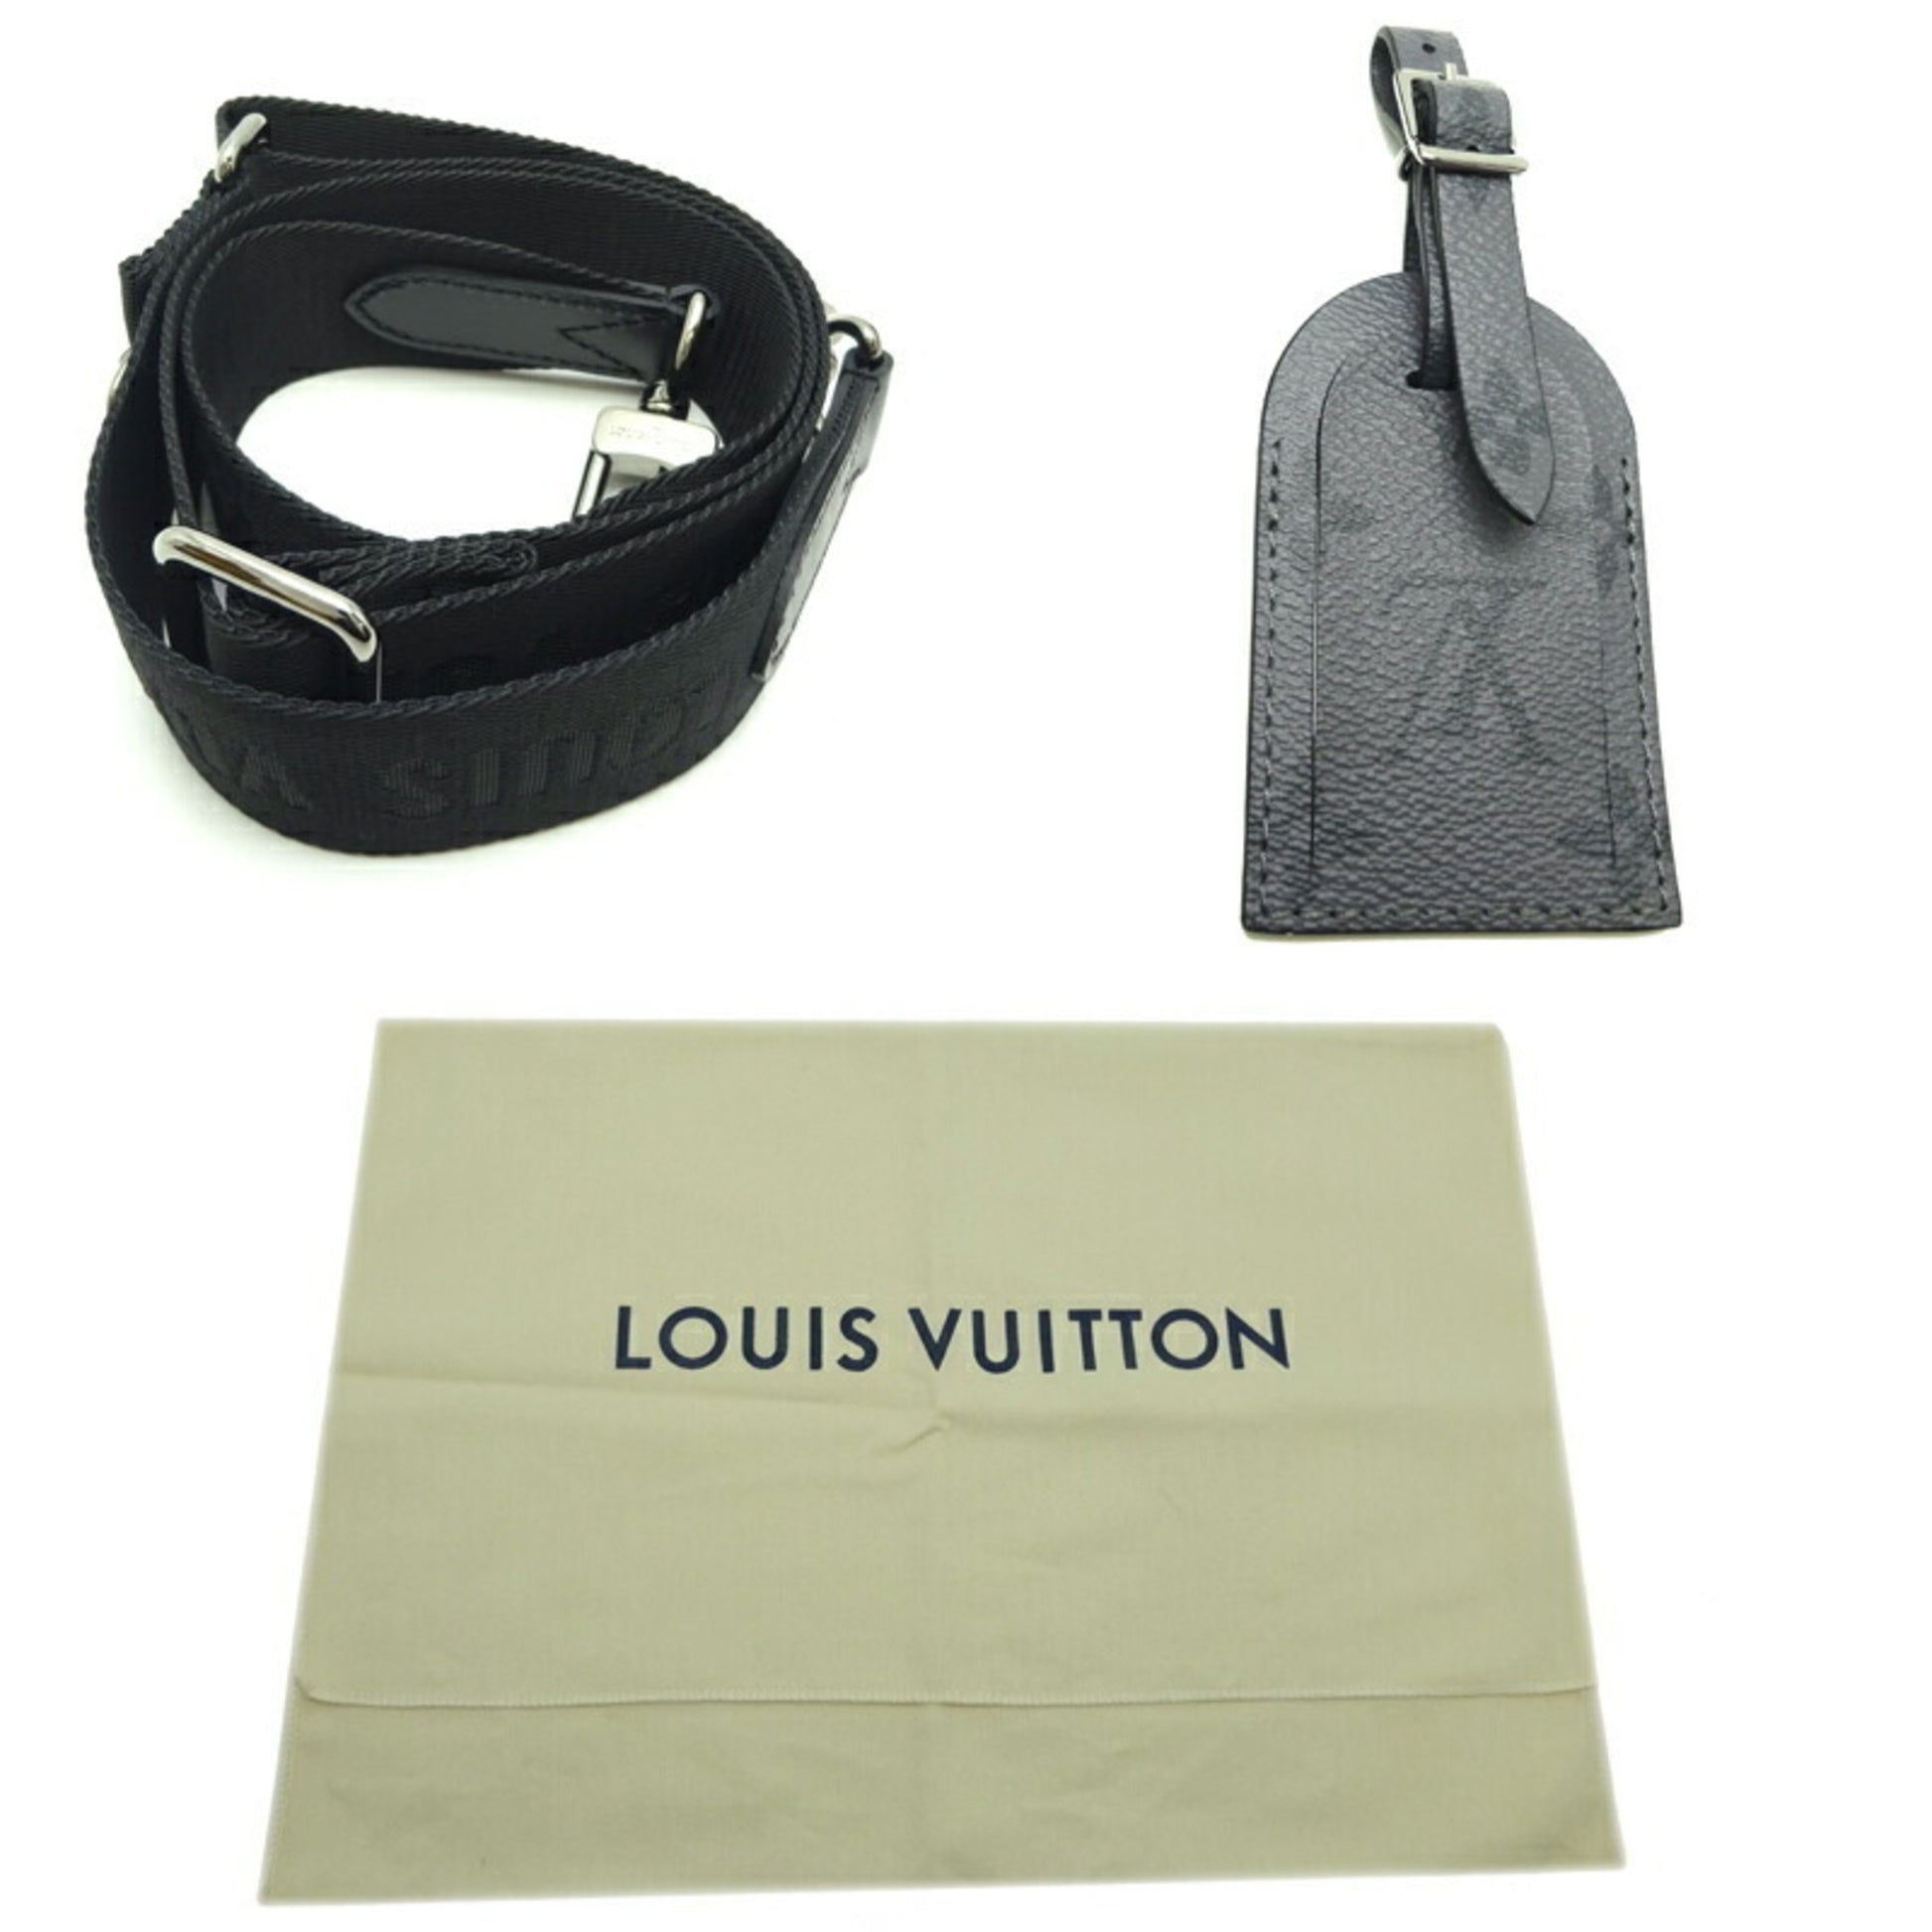 Shop Louis Vuitton Keepall City keepall (M45936) by JOY＋